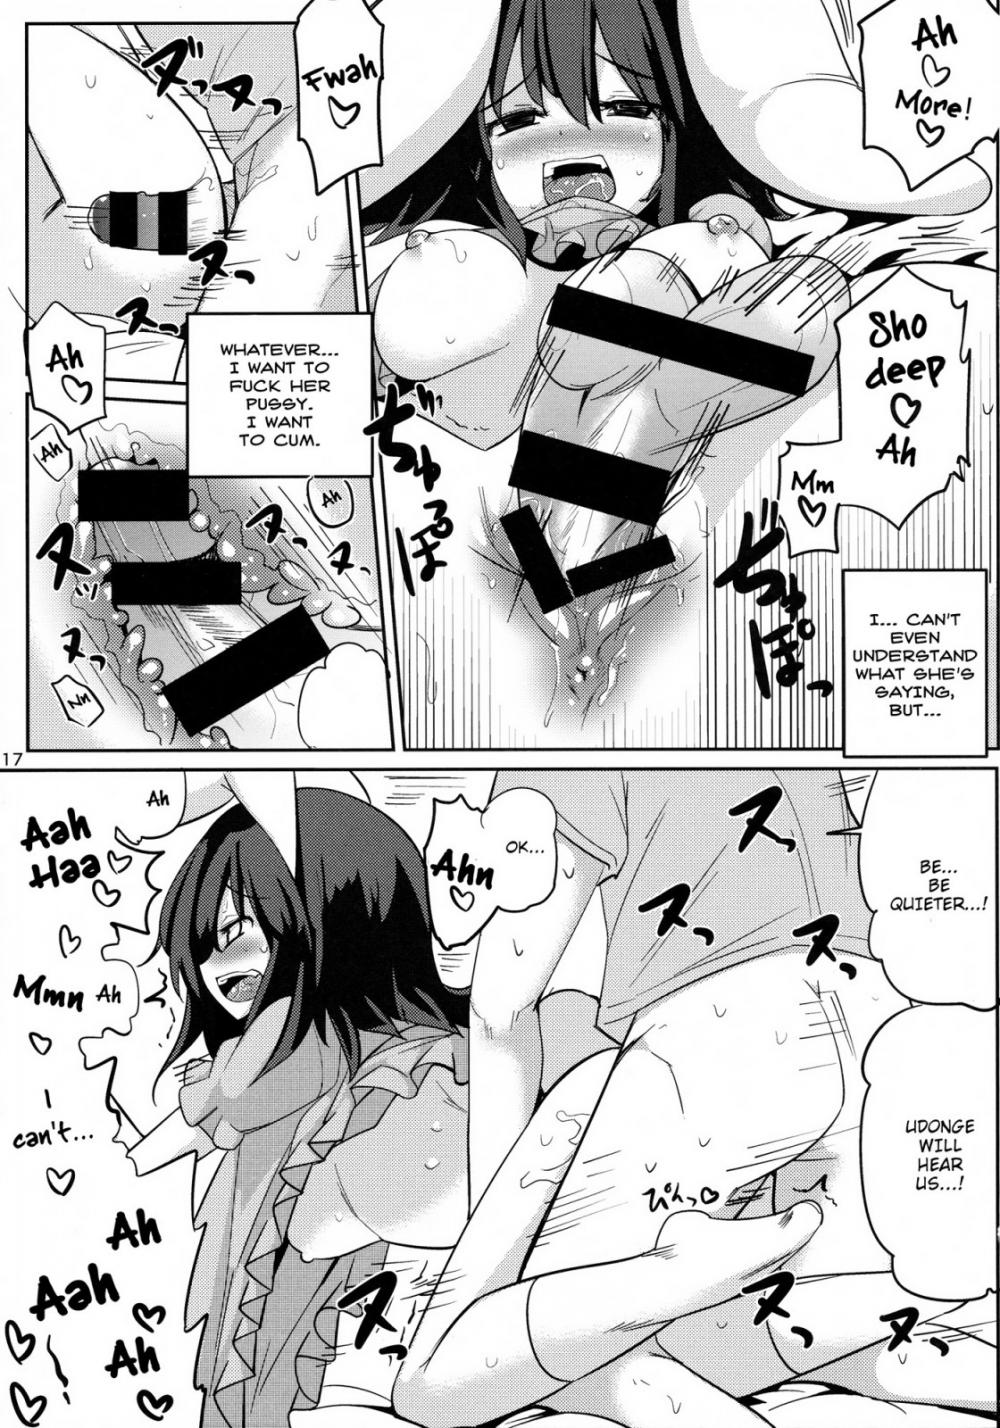 Hentai Manga Comic-Tewi-chan having an Affair-Read-16